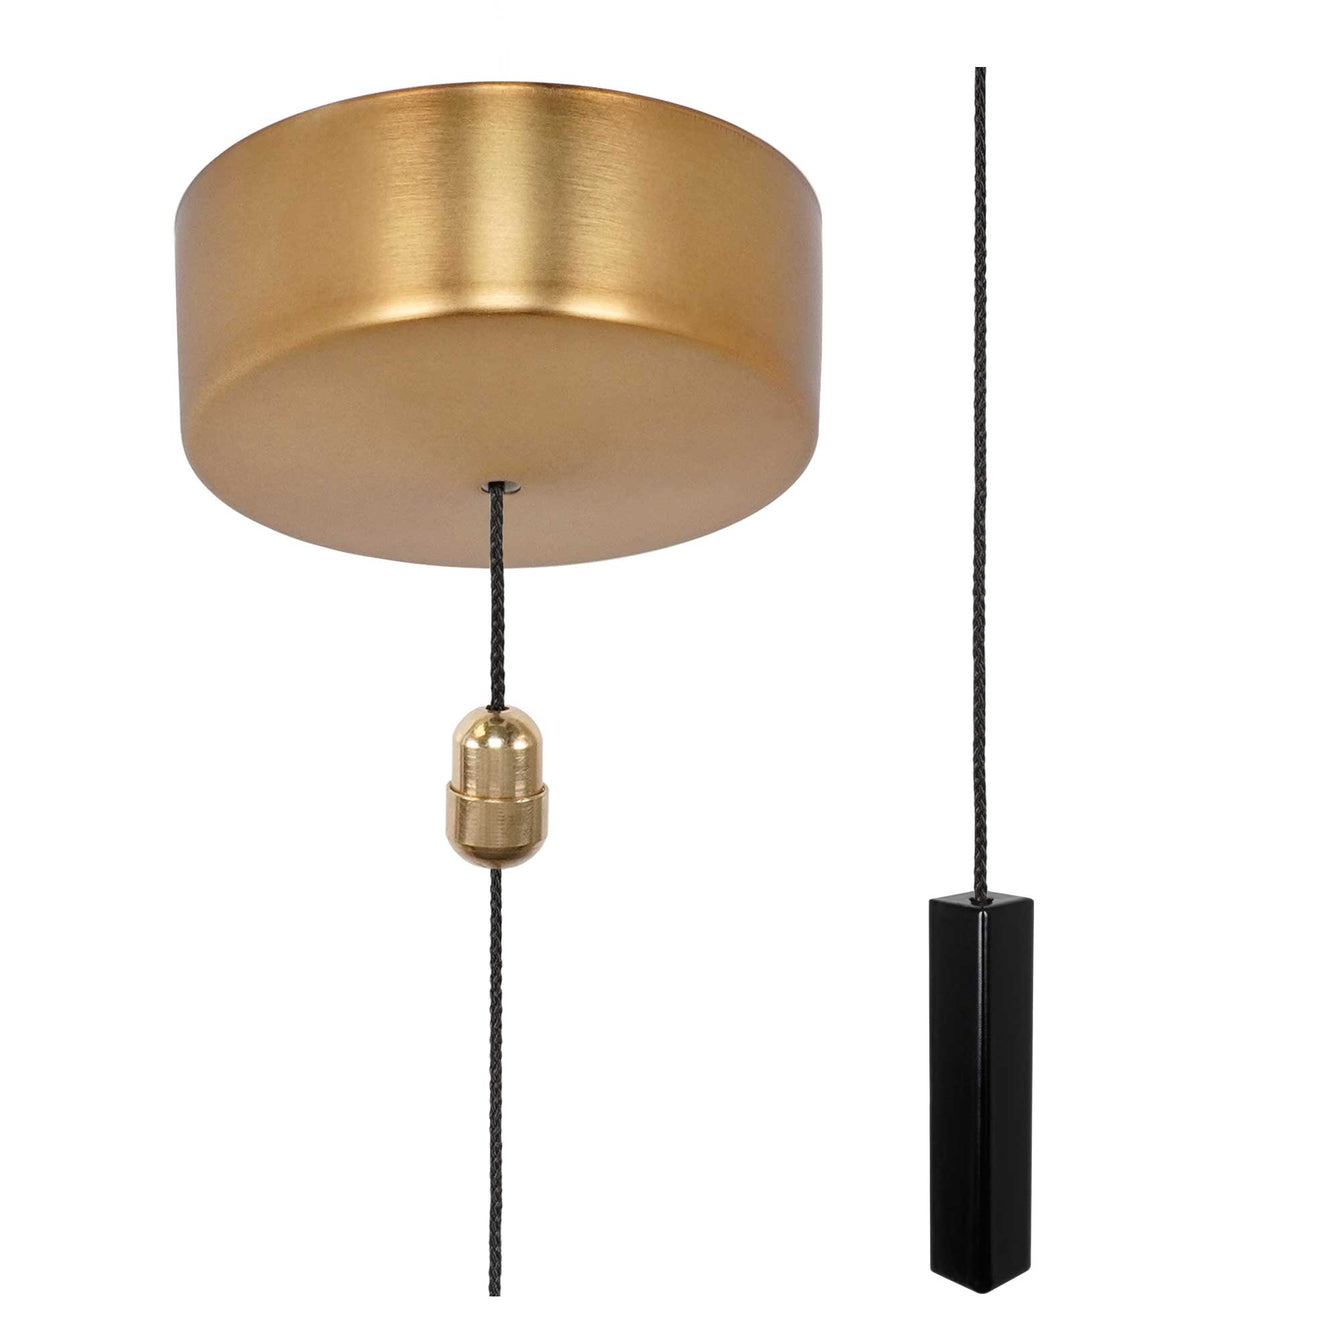 ElekTek Premium Brushed Brass Bathroom Light Pull Cord Switch Kit with Pull Chain Handle Dark Oak Drop / Brass